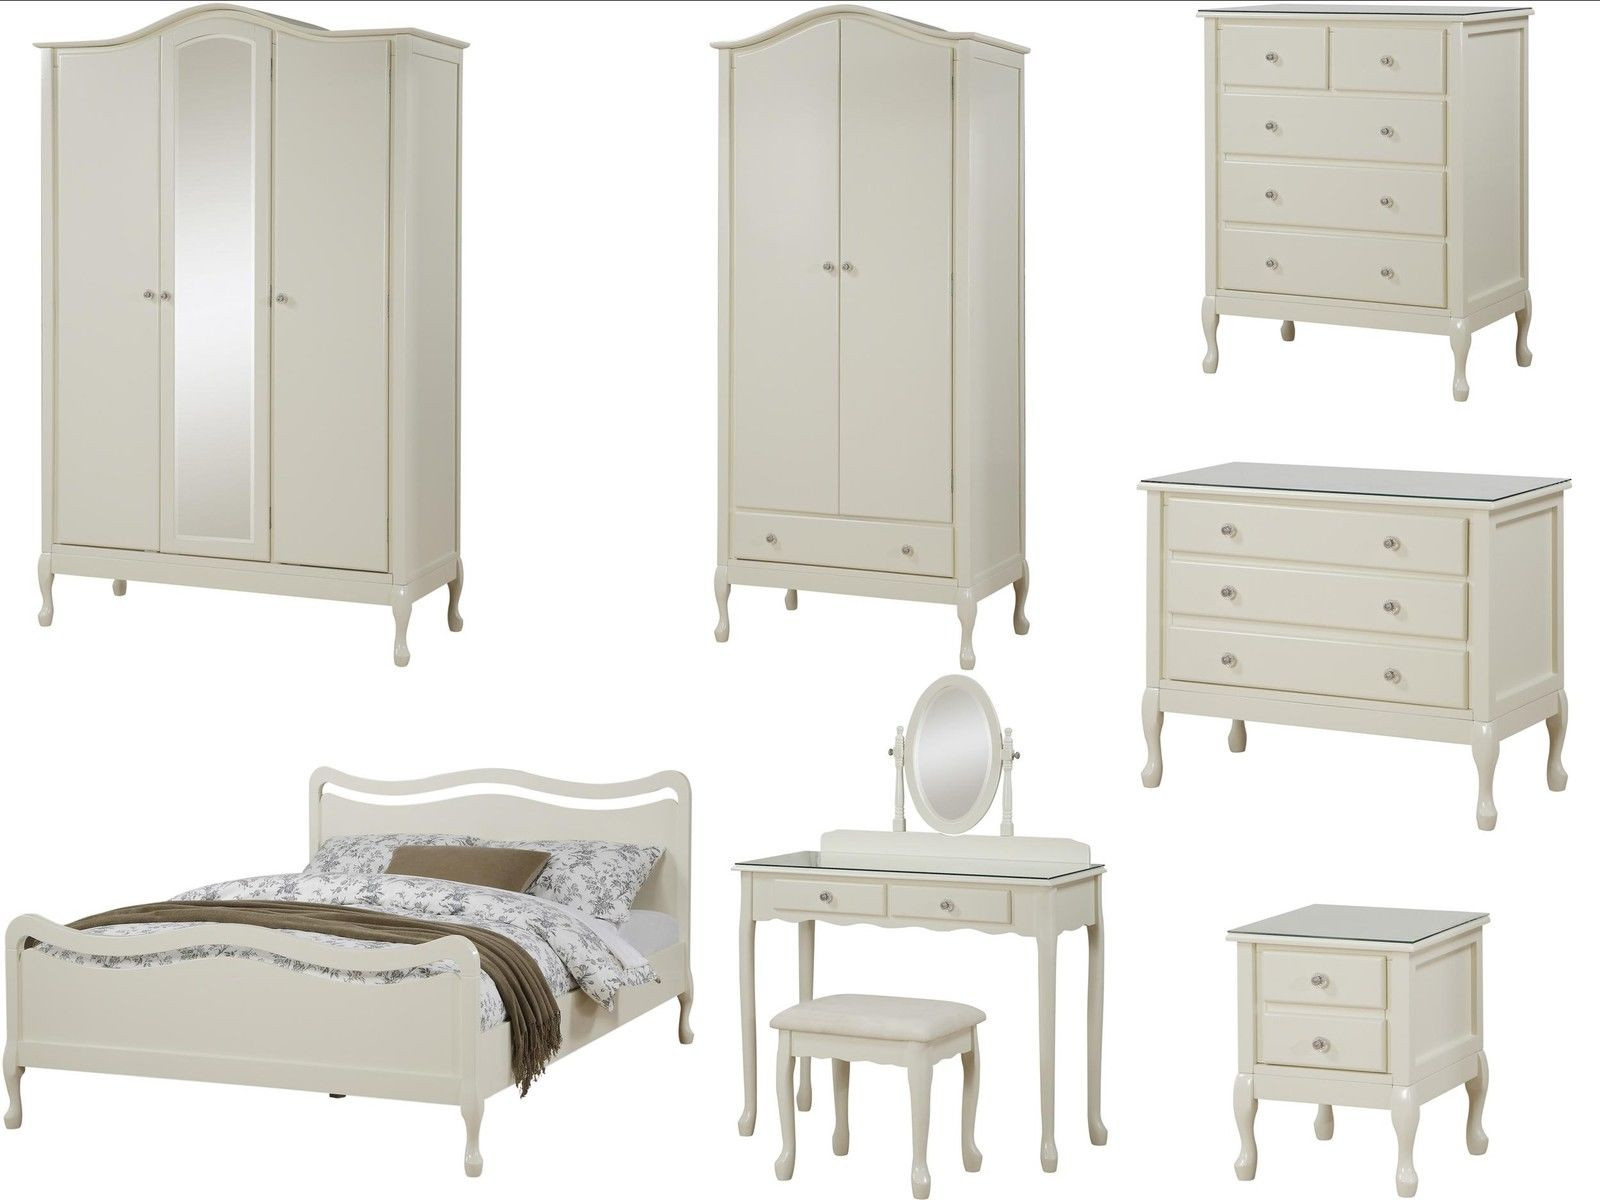 Shabby Chic Bedroom Furniture Sets
 New Shabby Chic Ivory Bedroom Furniture Wardrobe